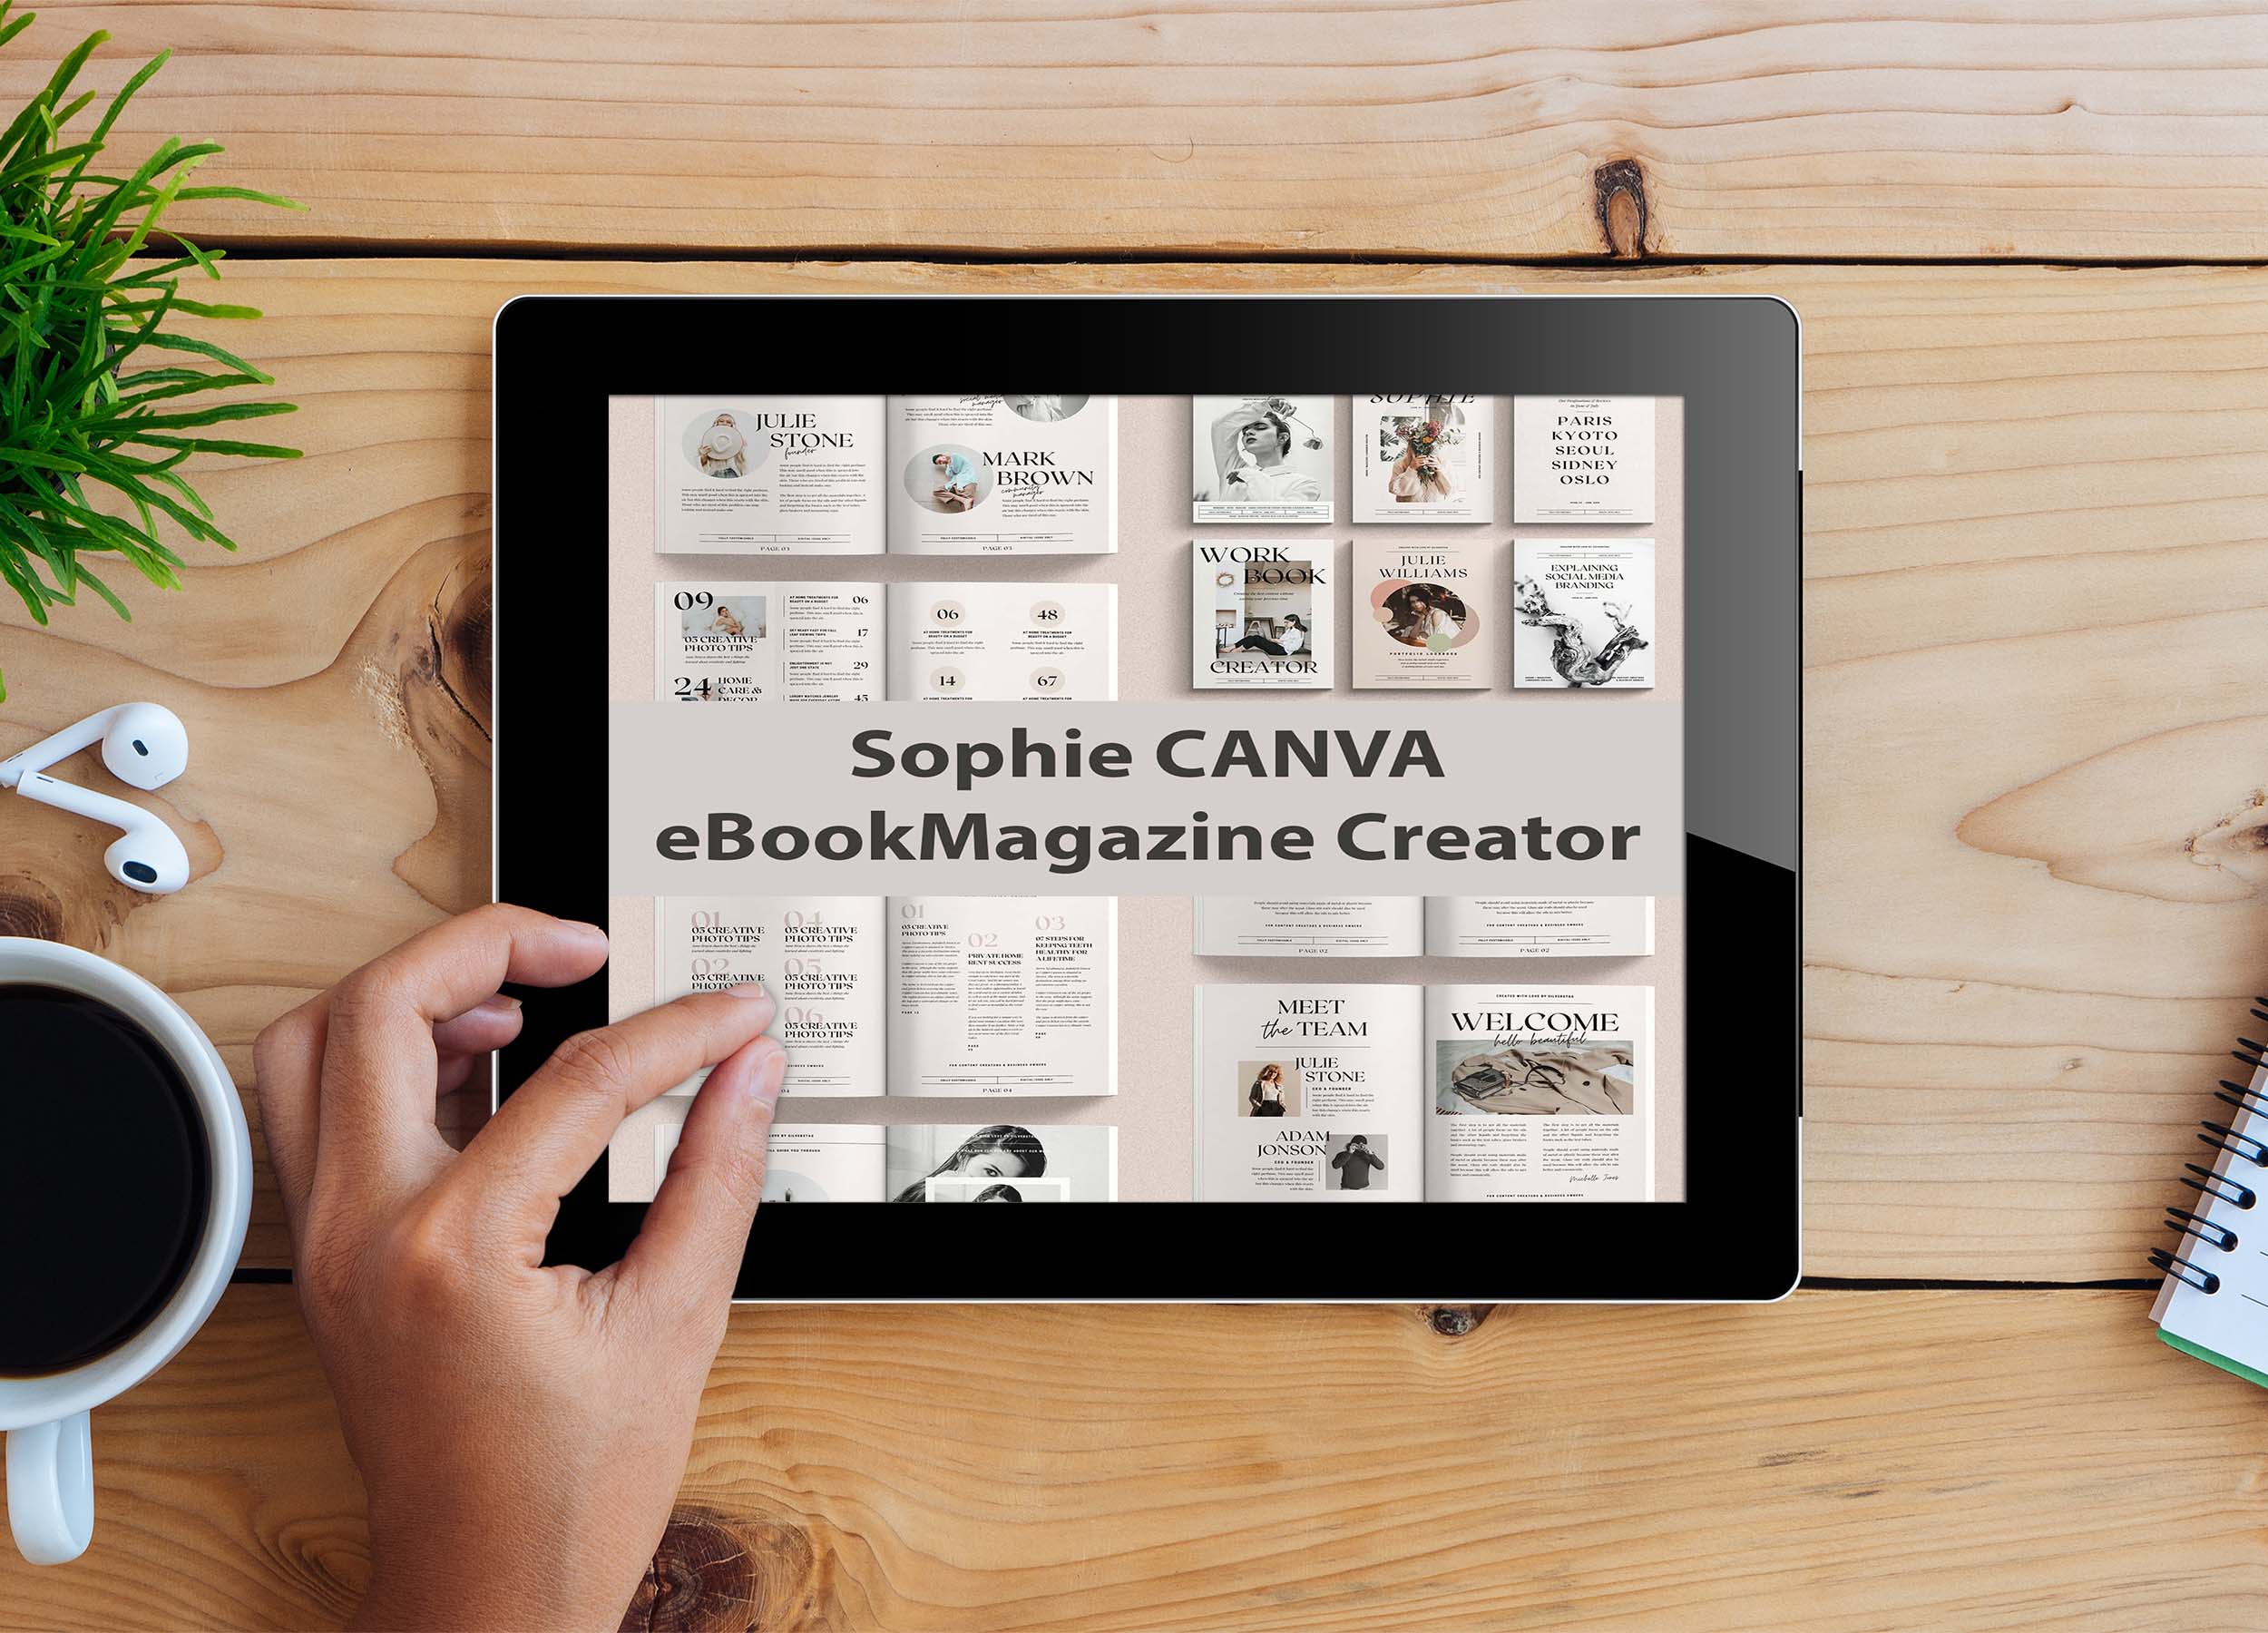 Sophie CANVA eBookMagazine Creator Tablet mockup.